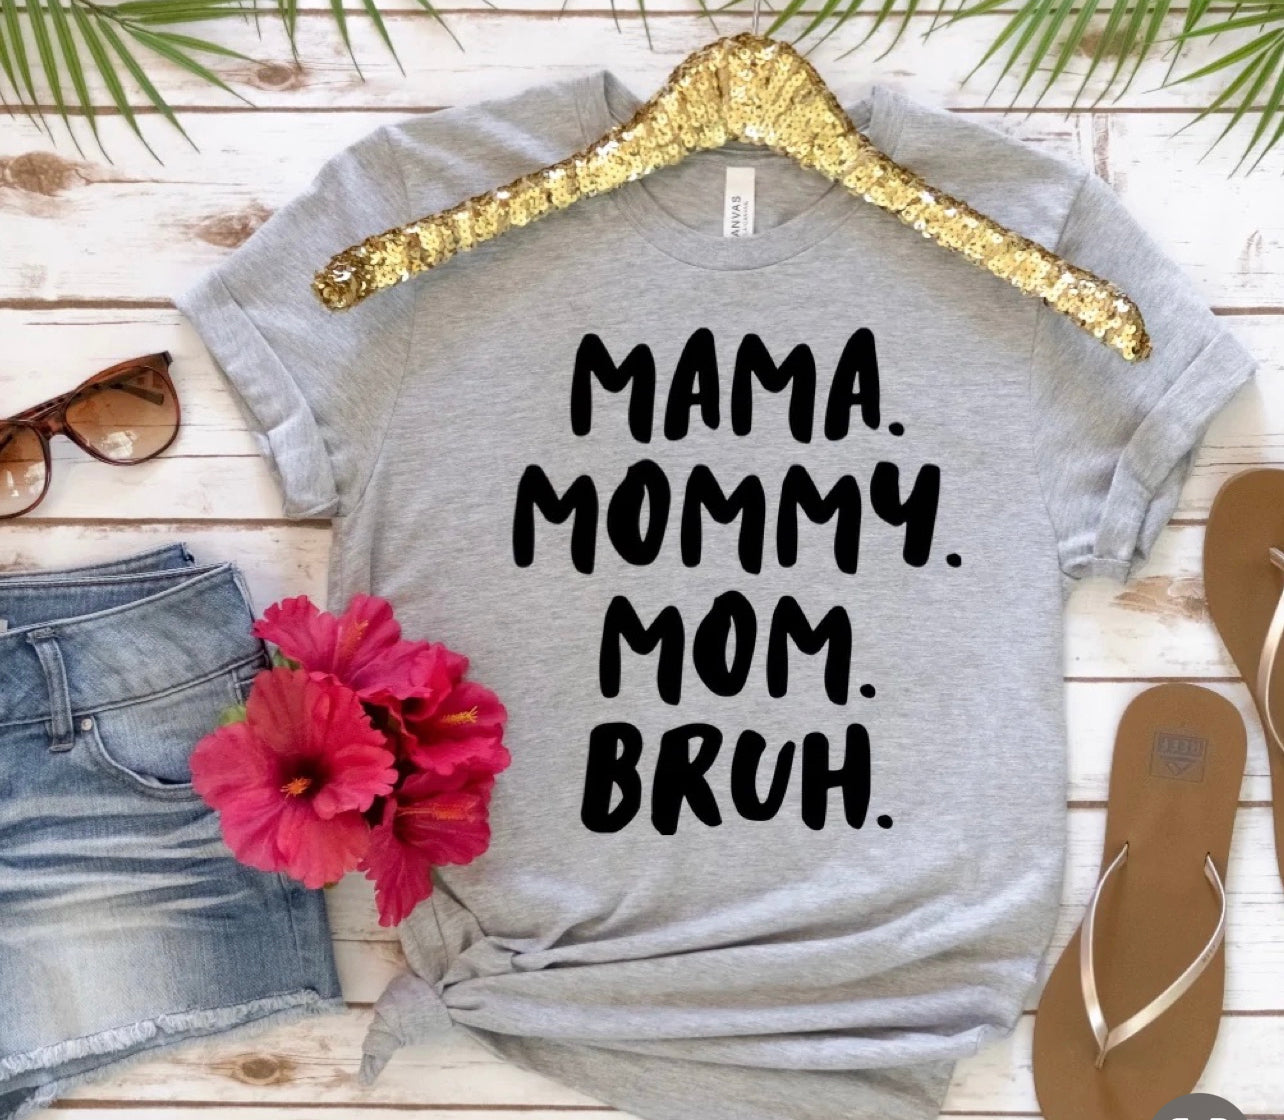 Mama mommy mom bruh shirt| from mama to bruh shirt